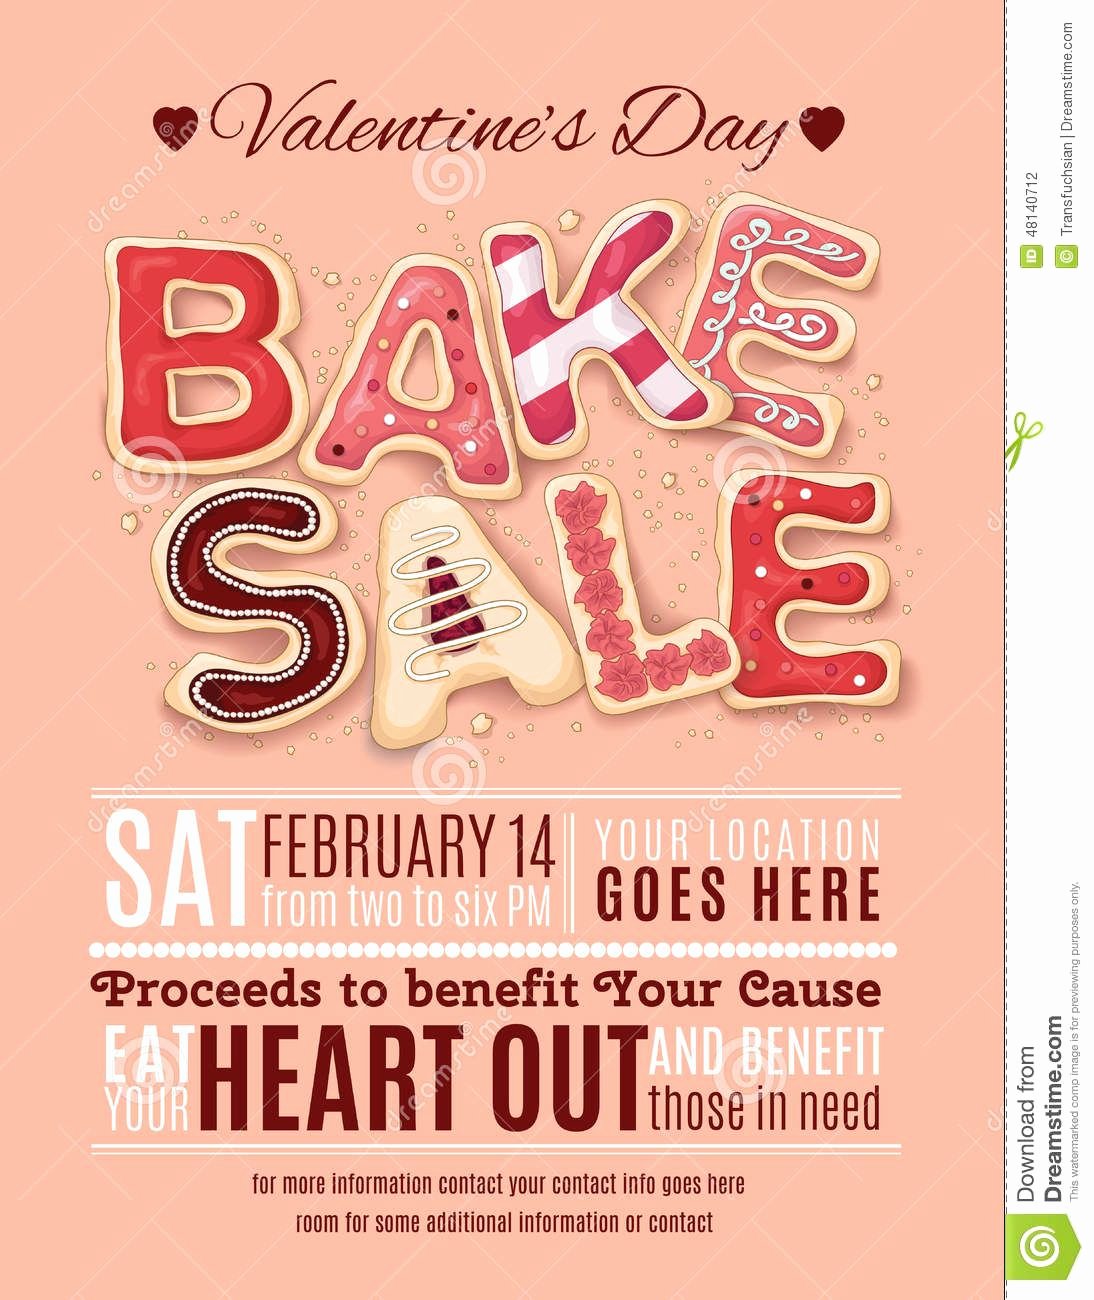 Bake Sale Flyer Templates Free Inspirational Valentines Day Bake Sale Flyer Template Download From